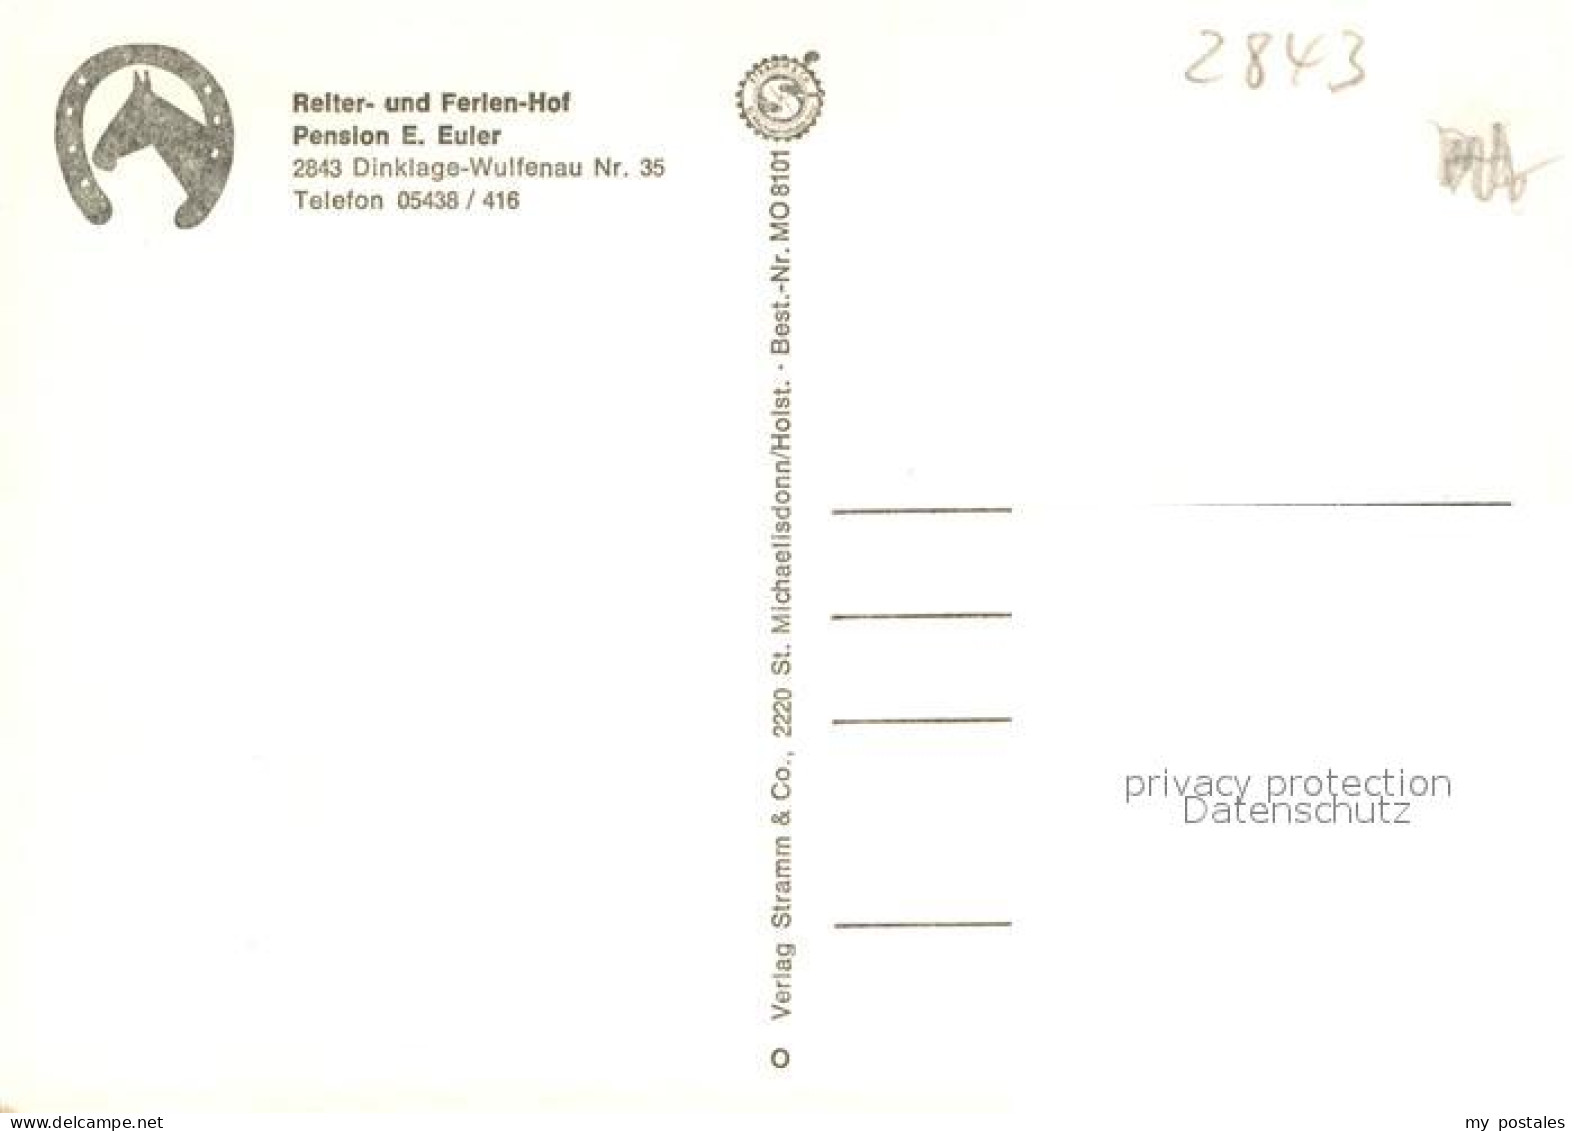 73641591 Wulfenau Reiter- Und Ferienhof Pension Euler Stallgebaeude Sattelkammer - Dinklage